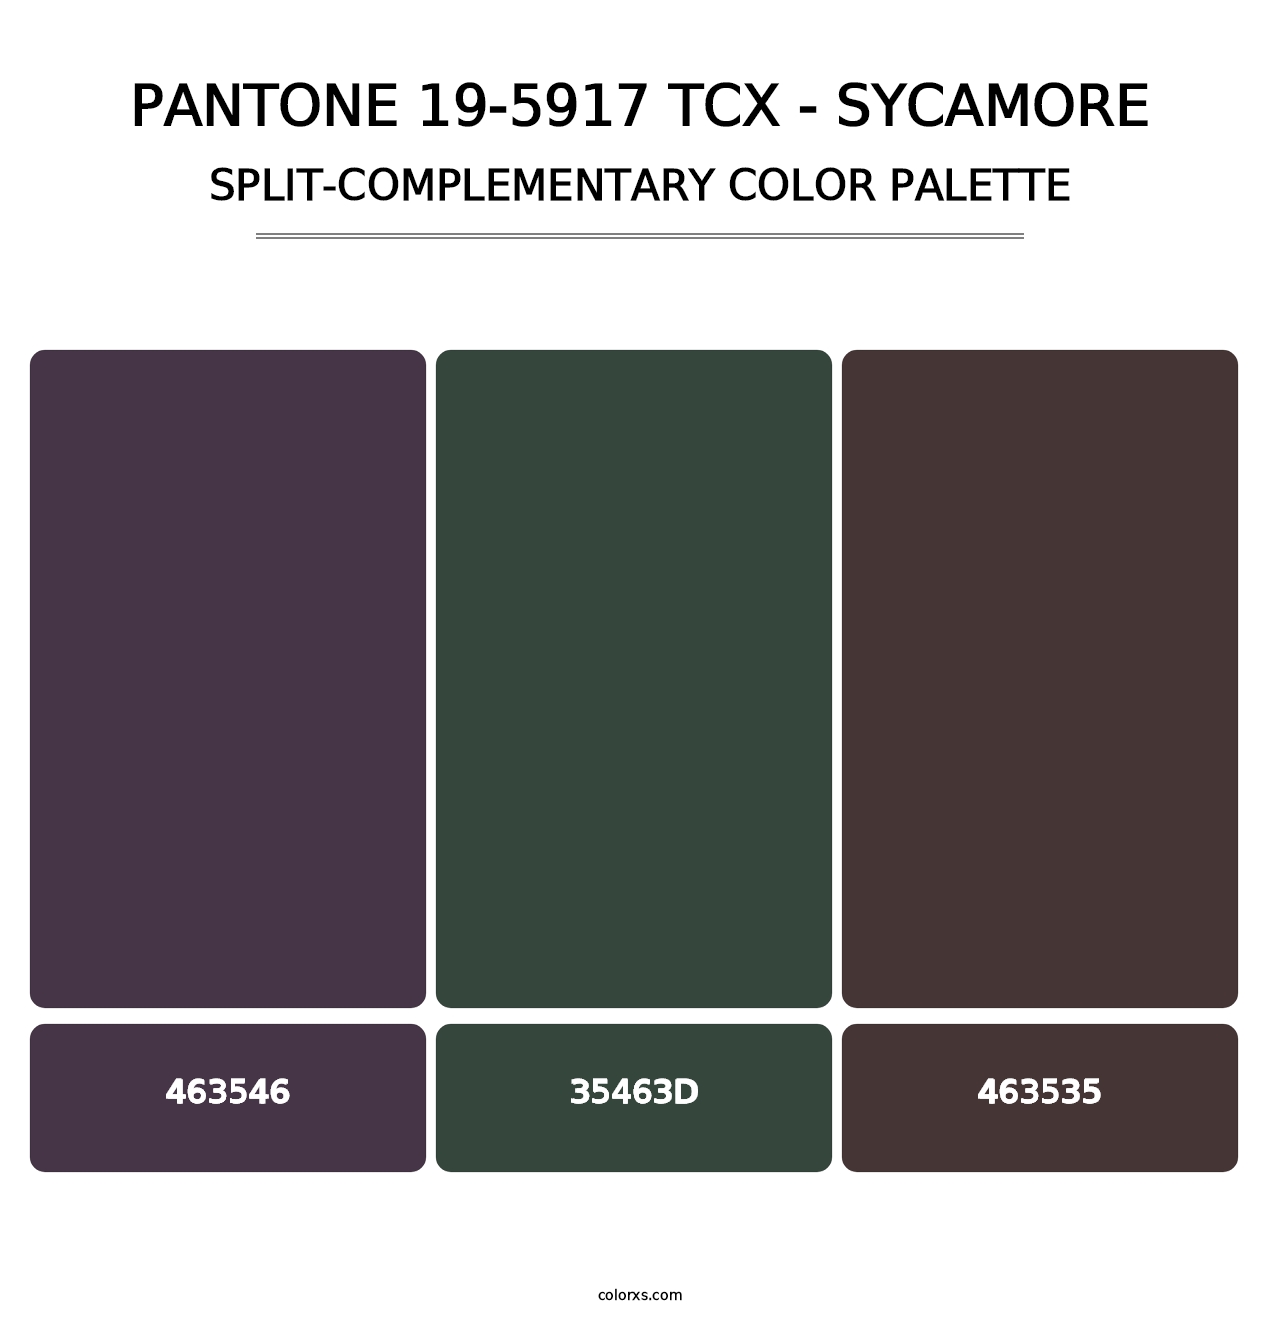 PANTONE 19-5917 TCX - Sycamore - Split-Complementary Color Palette